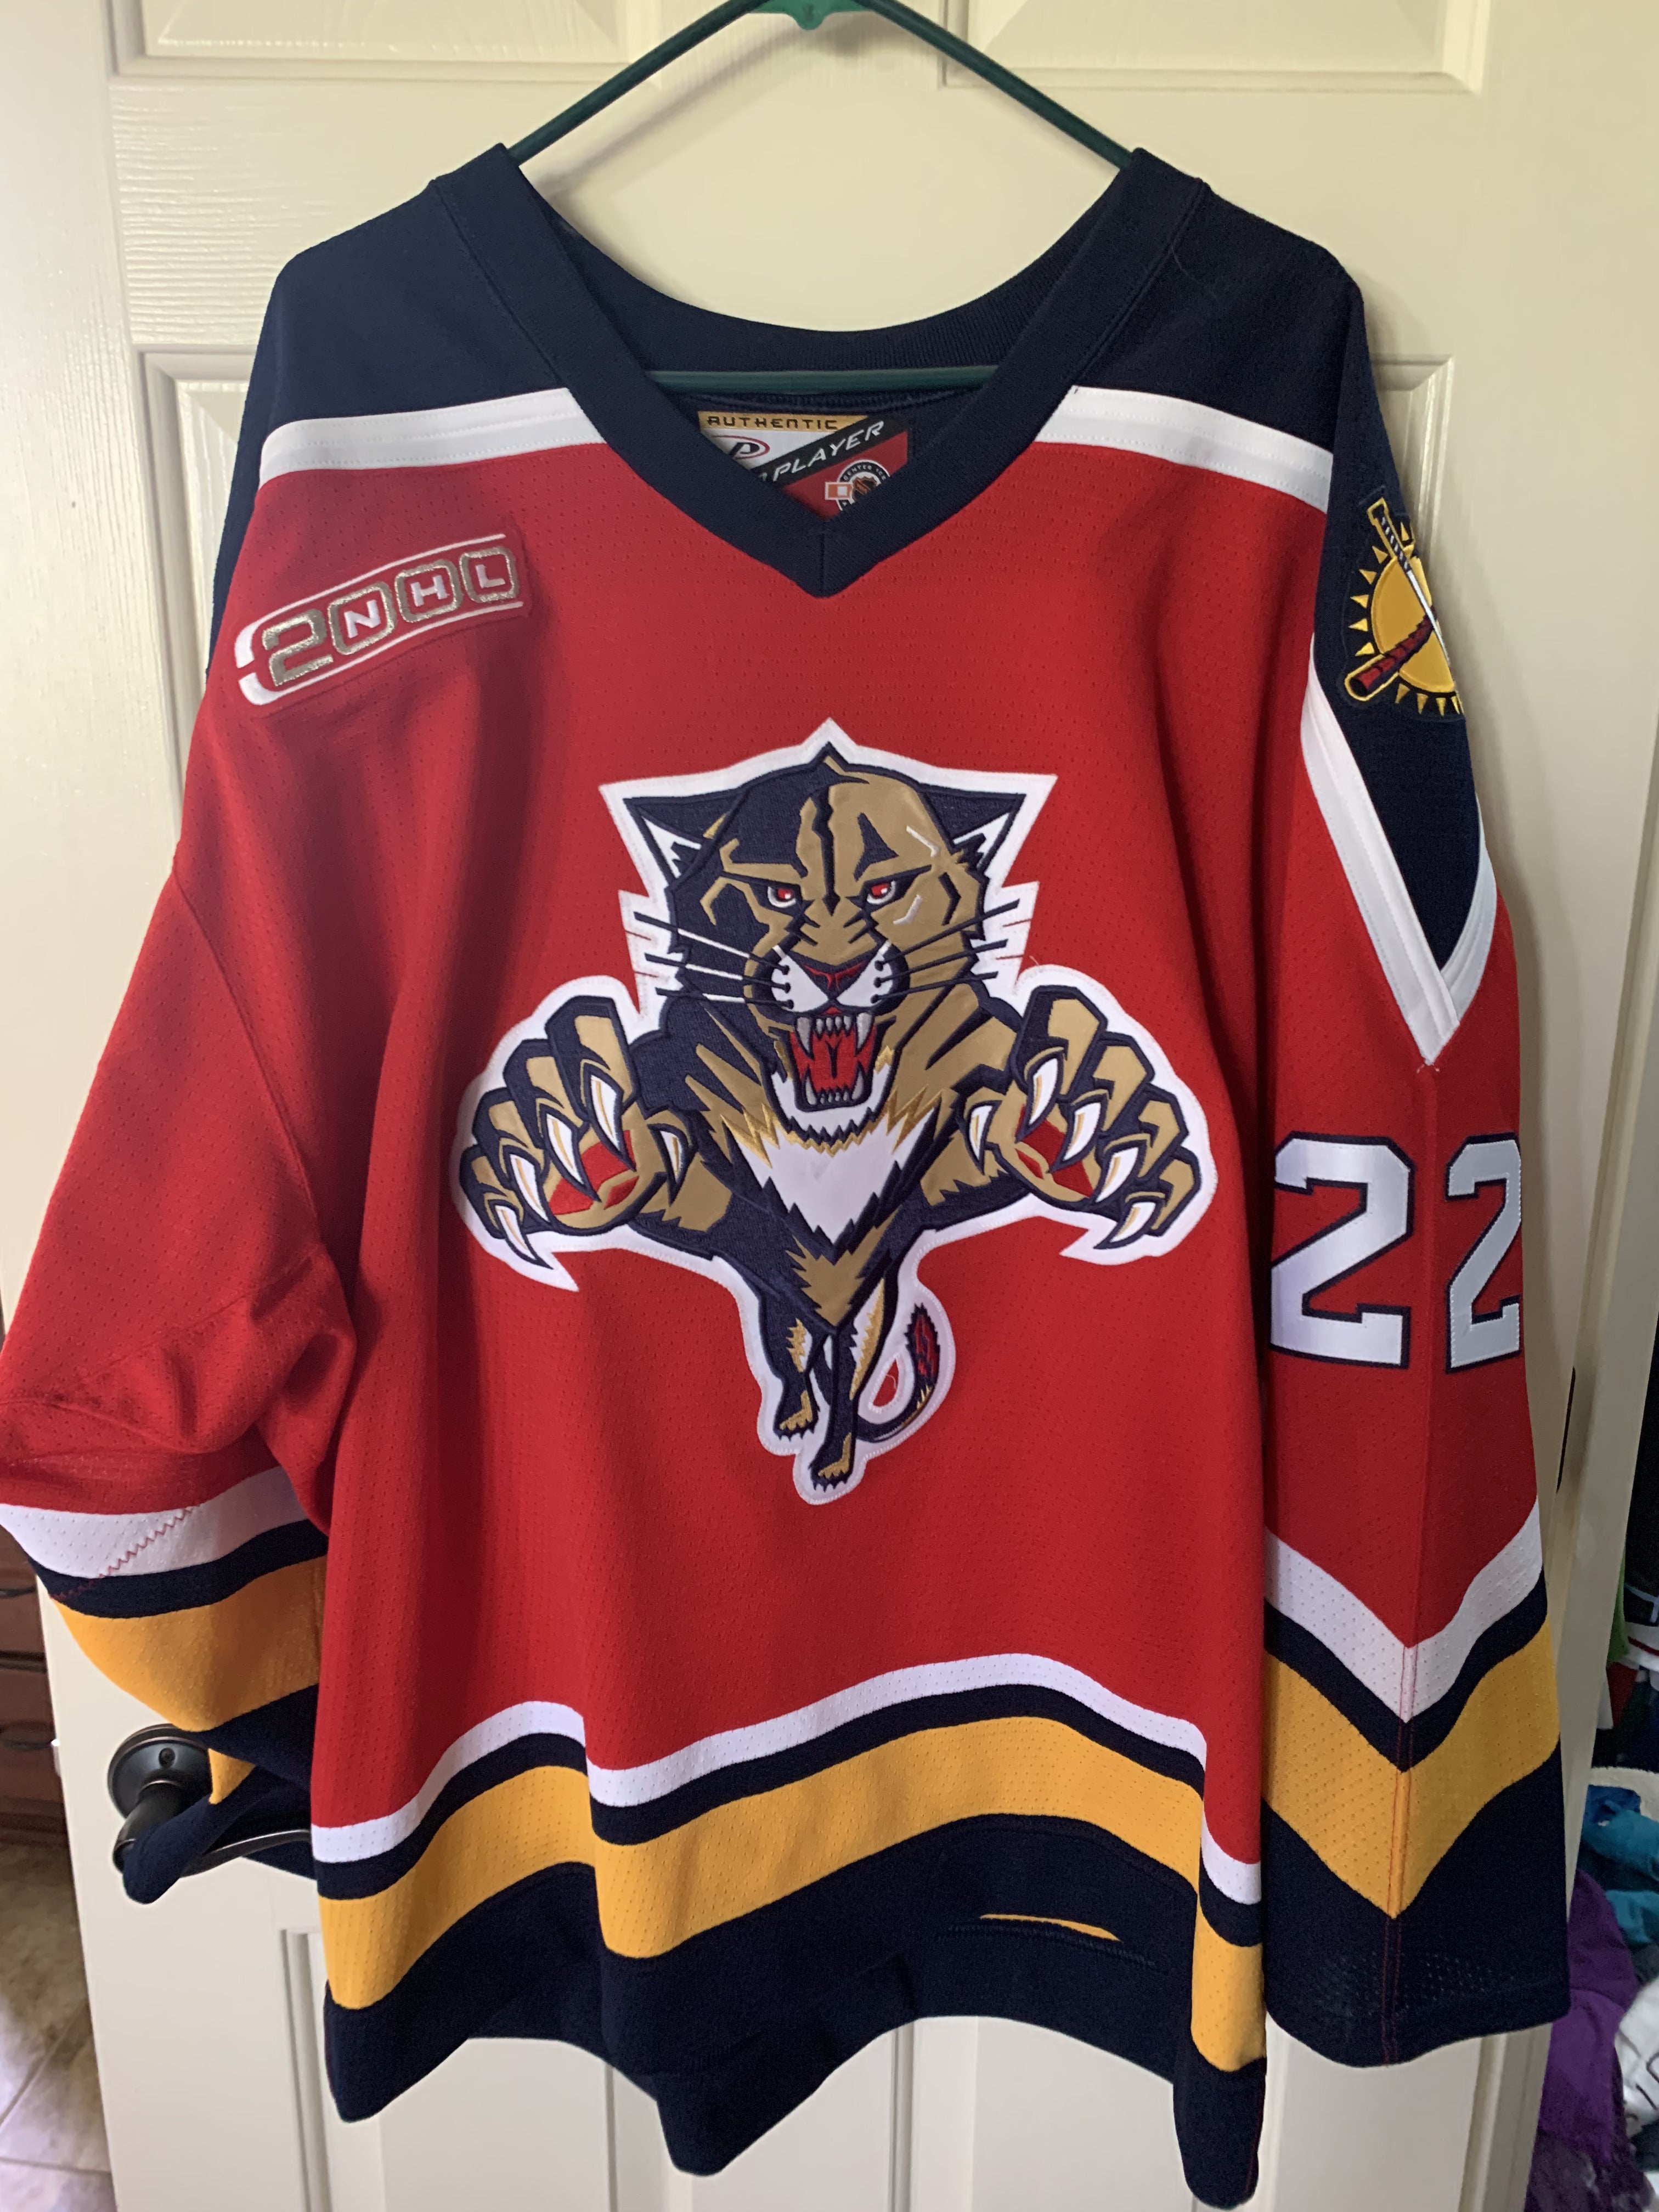 Aleksander Barkov Florida Panthers Autographed Red #16 Custom Jersey